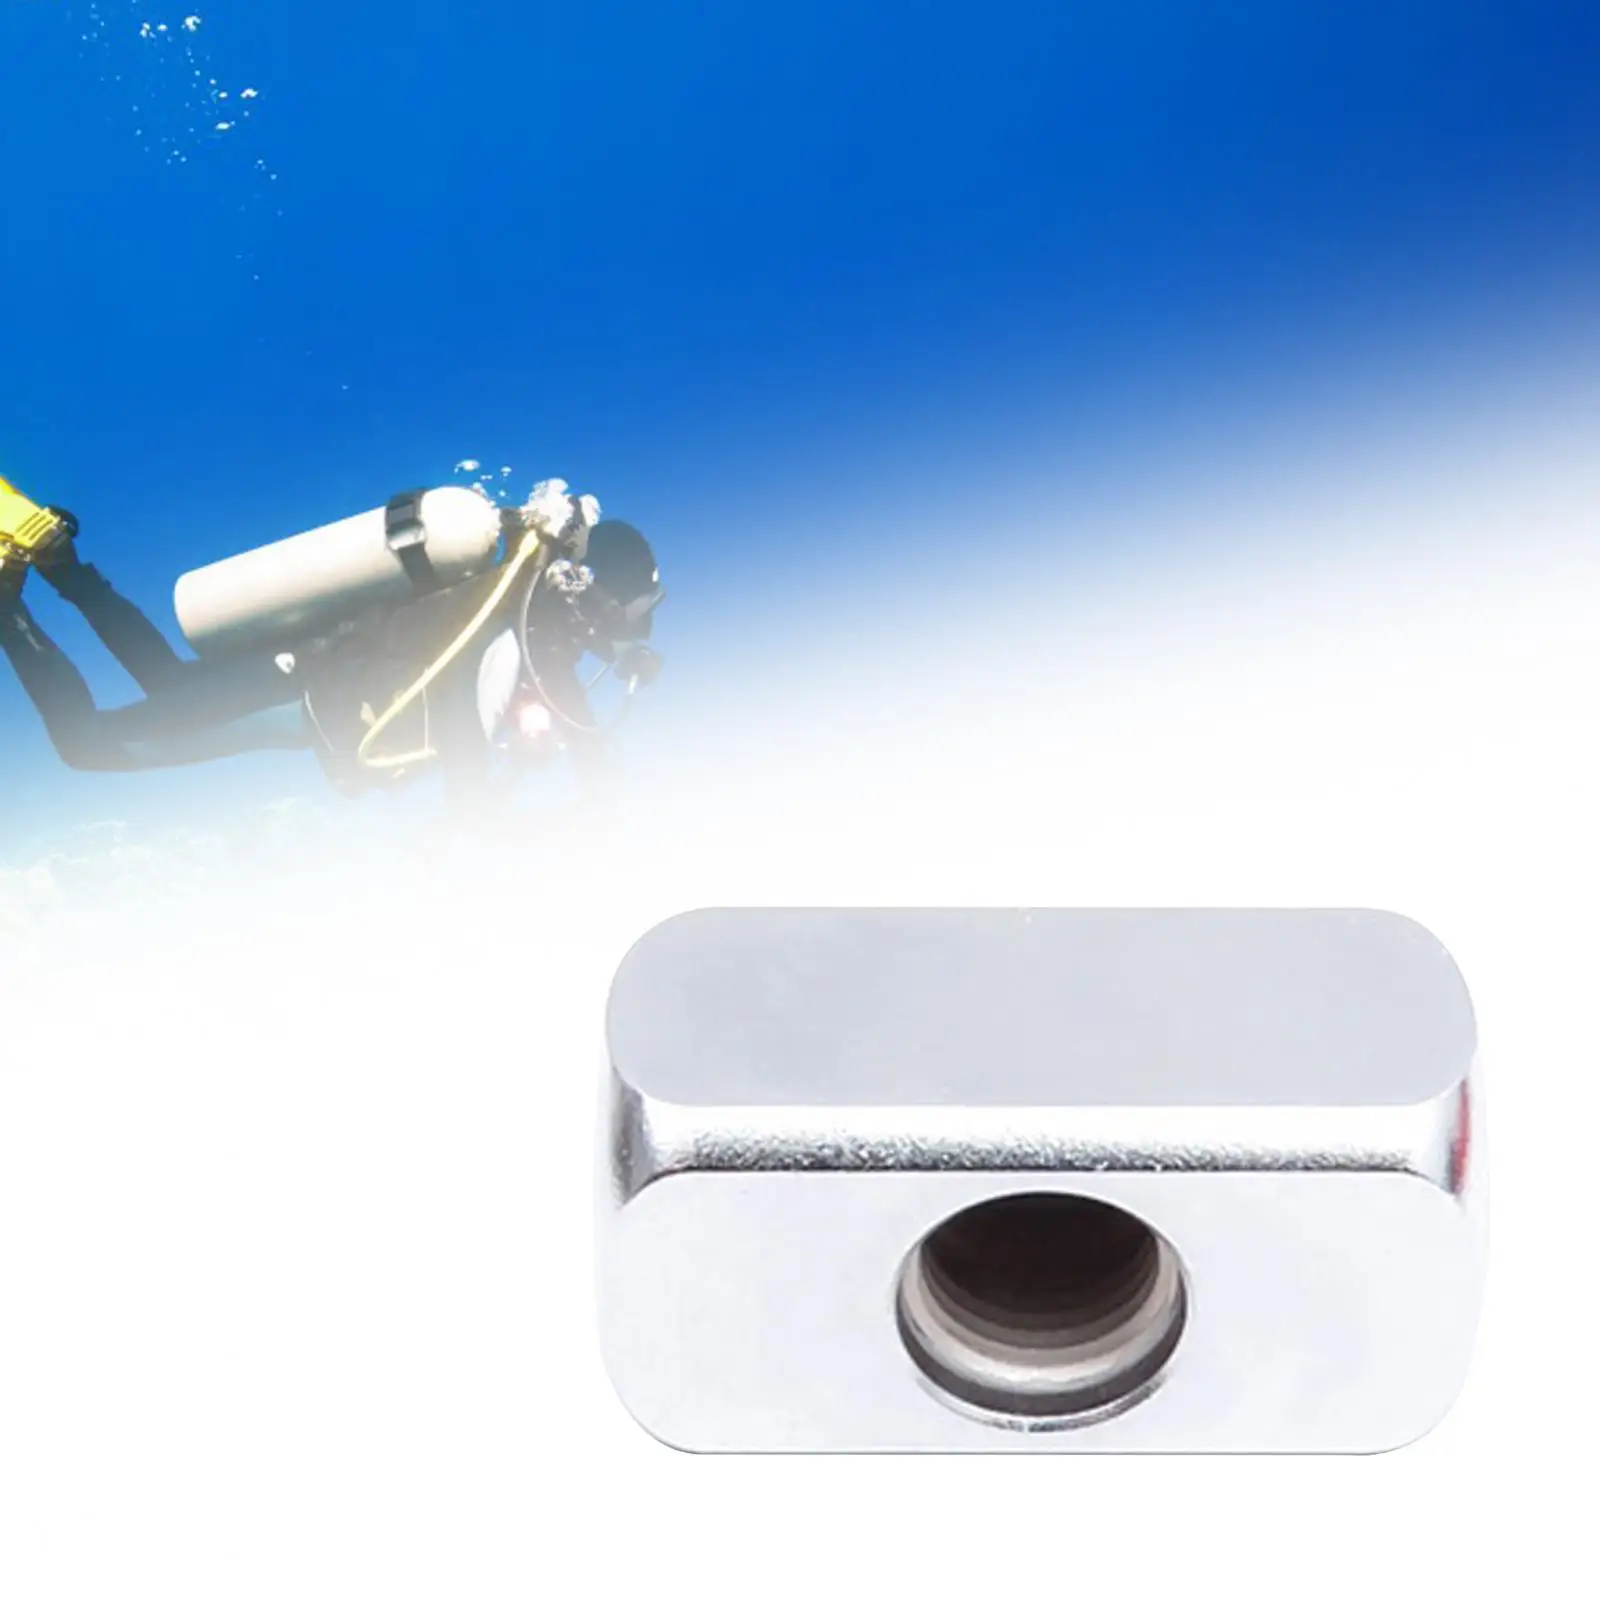 Scuba Diving Dive Regulator Adapter Accessories Water Sports